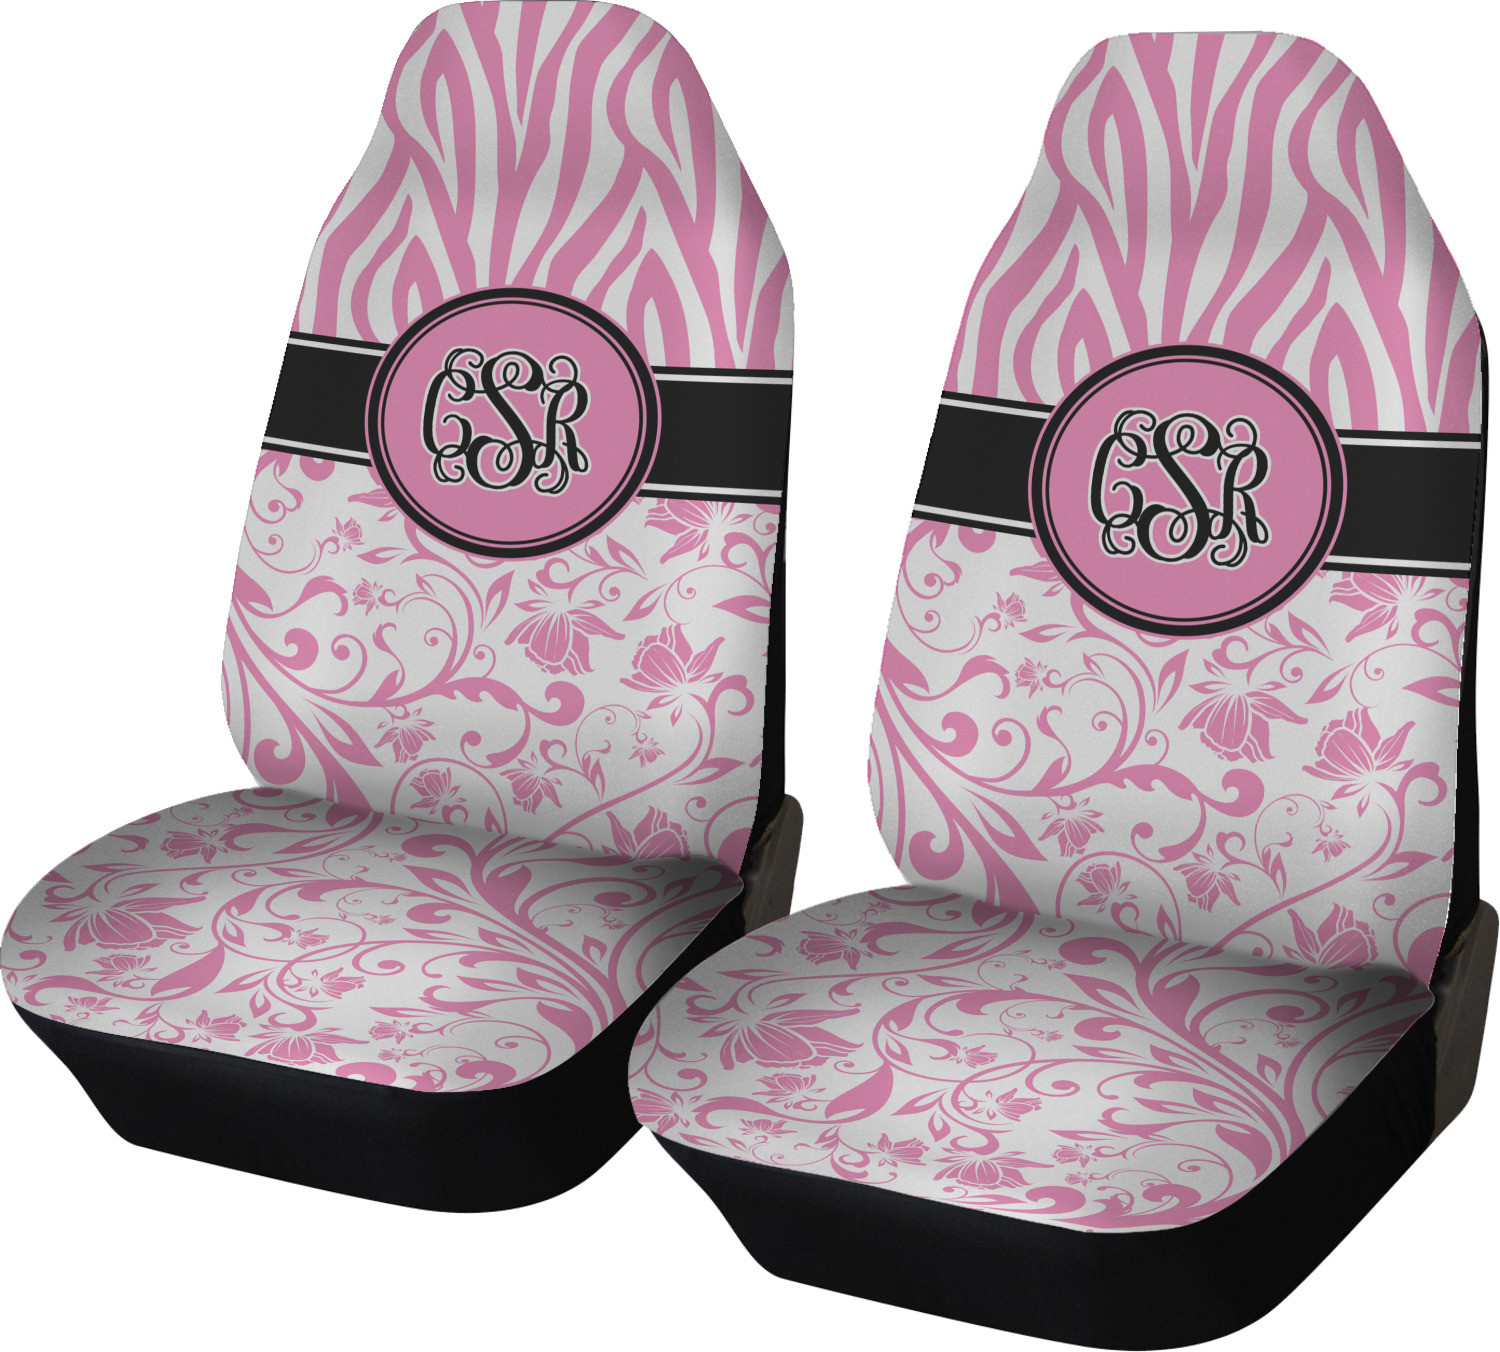 Zebra & Floral Design Custom Car Seat Covers - Set of Two